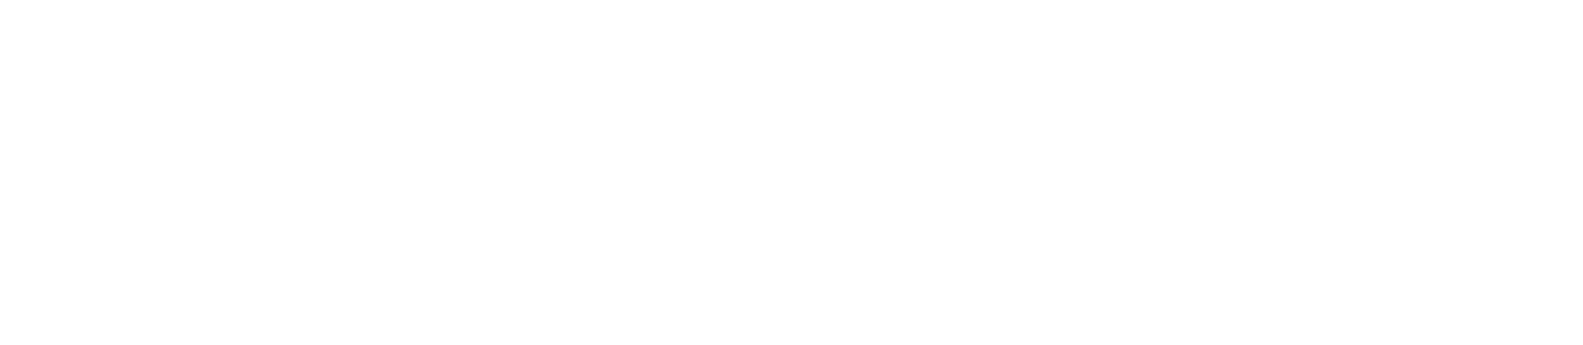 Logotipo de Ozon PNG